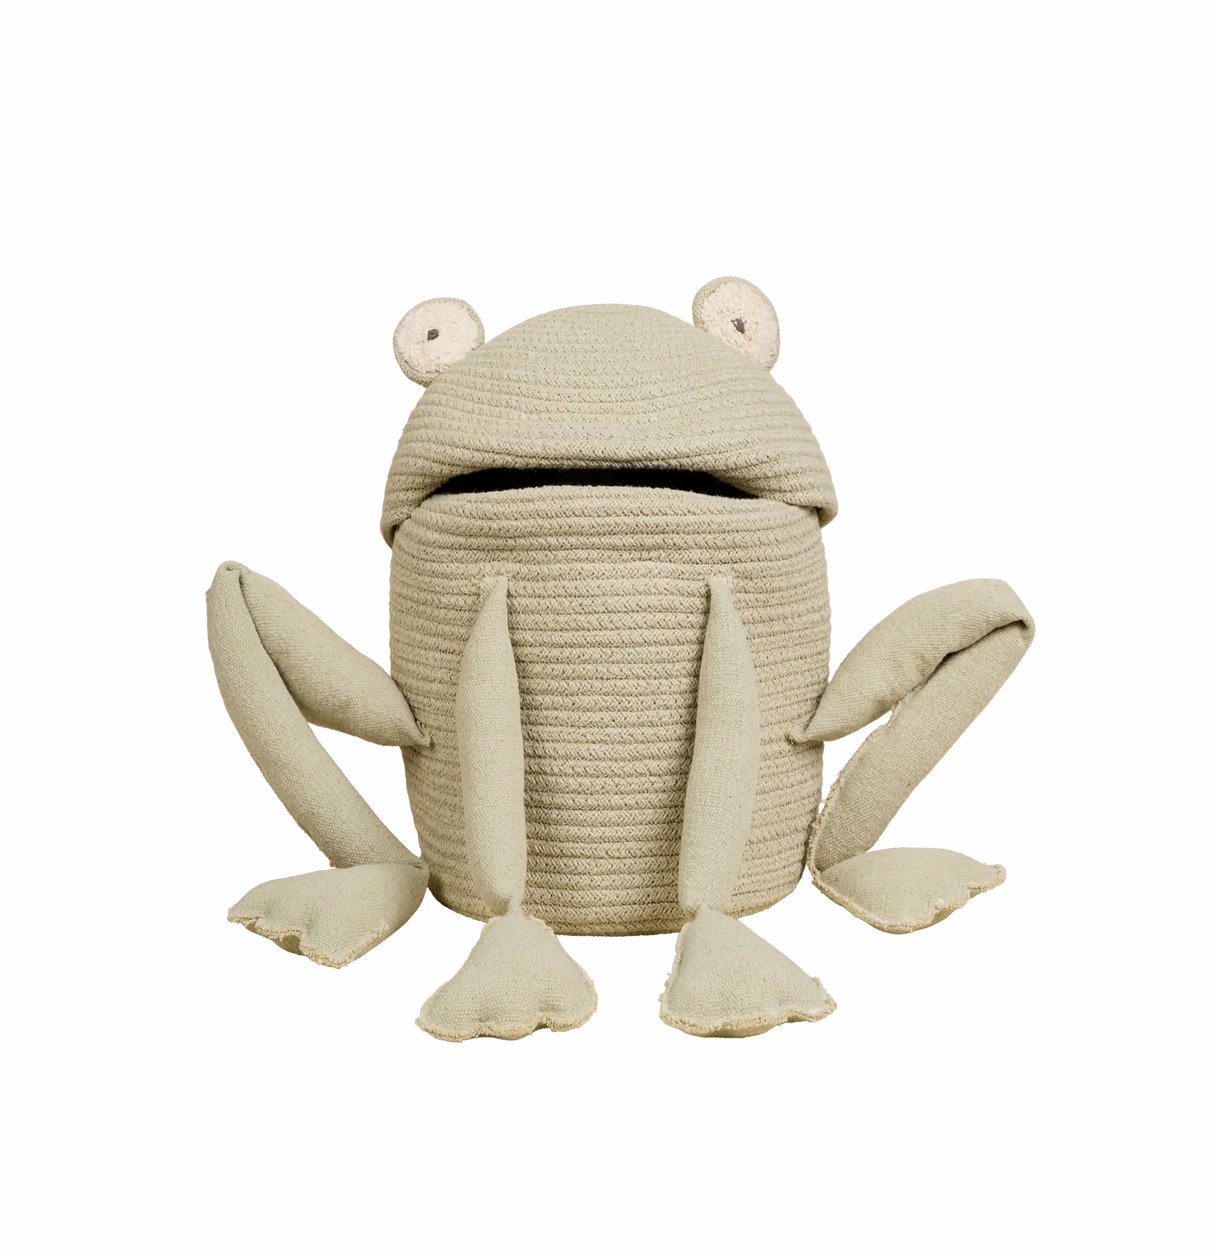 Fred the frog- storage basket